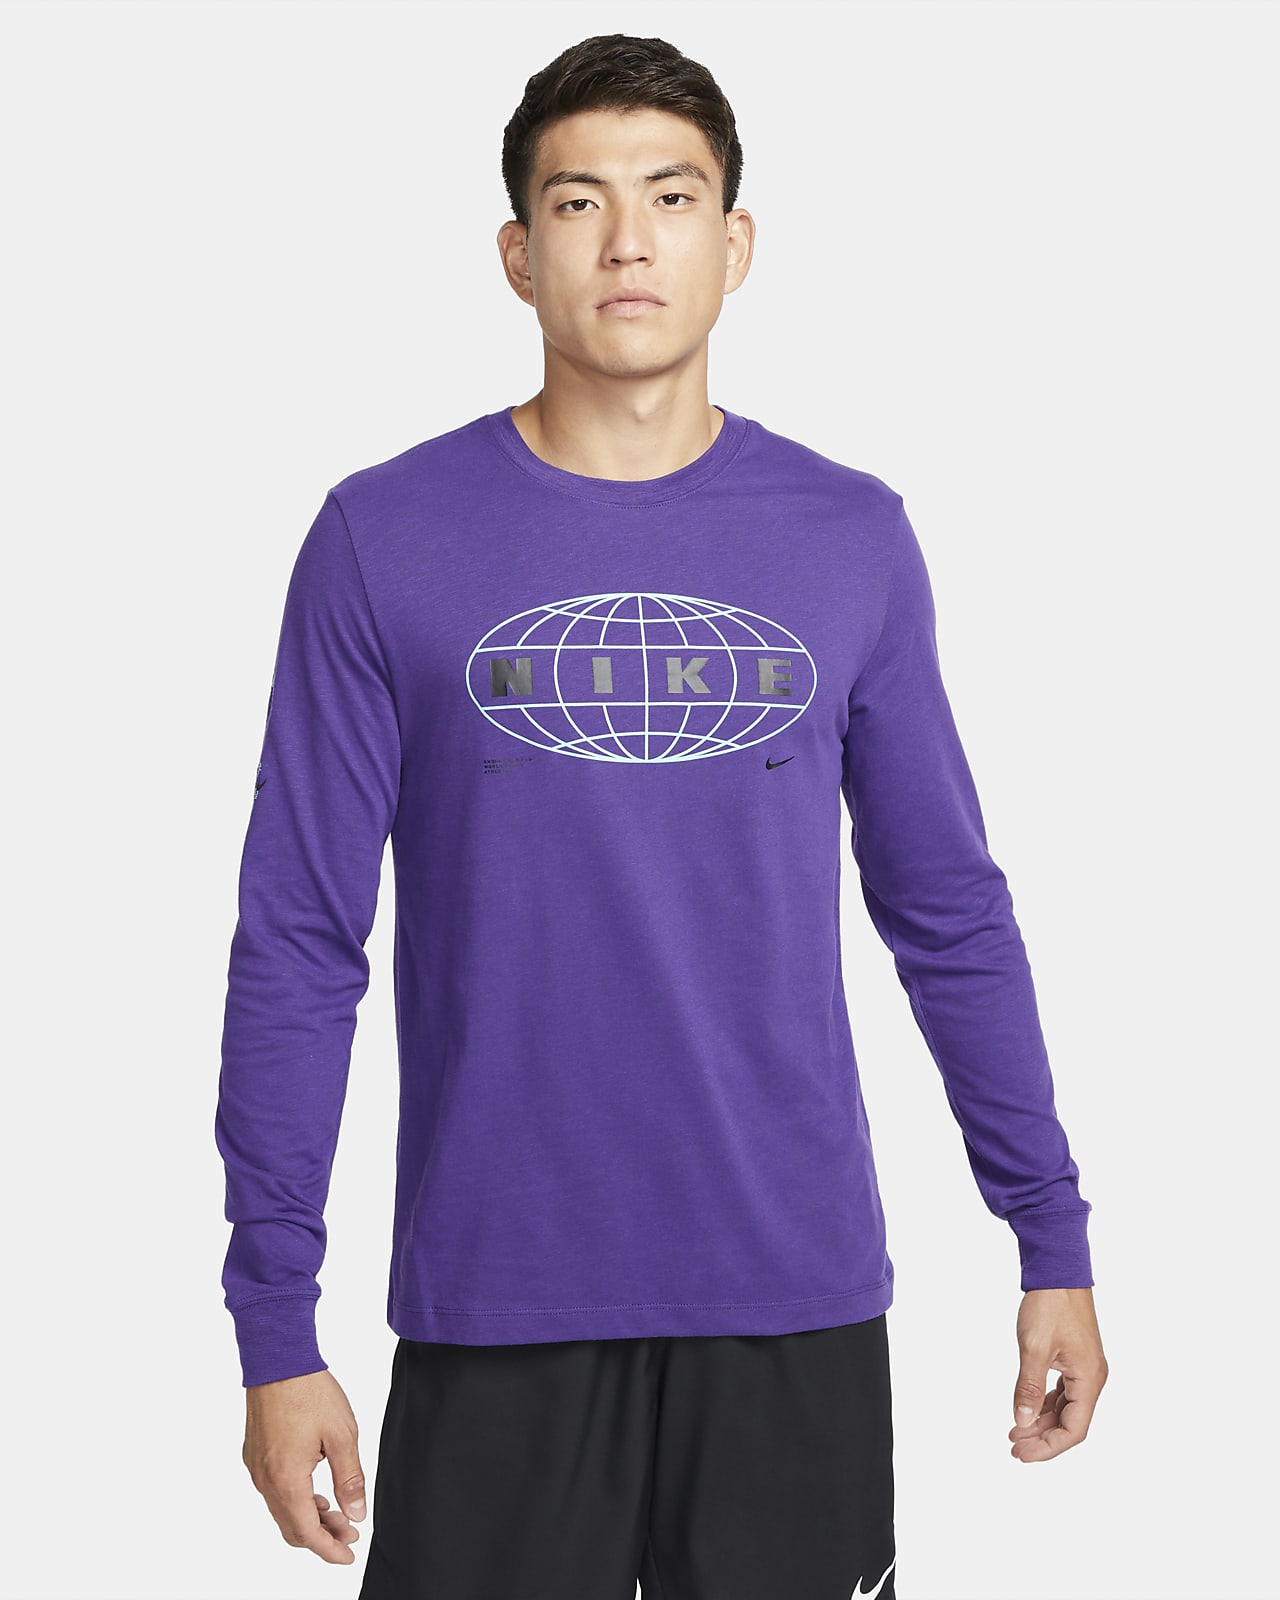 Nike Dri-Fit Basketball Jersey Men’s Blank Purple Size 3XL